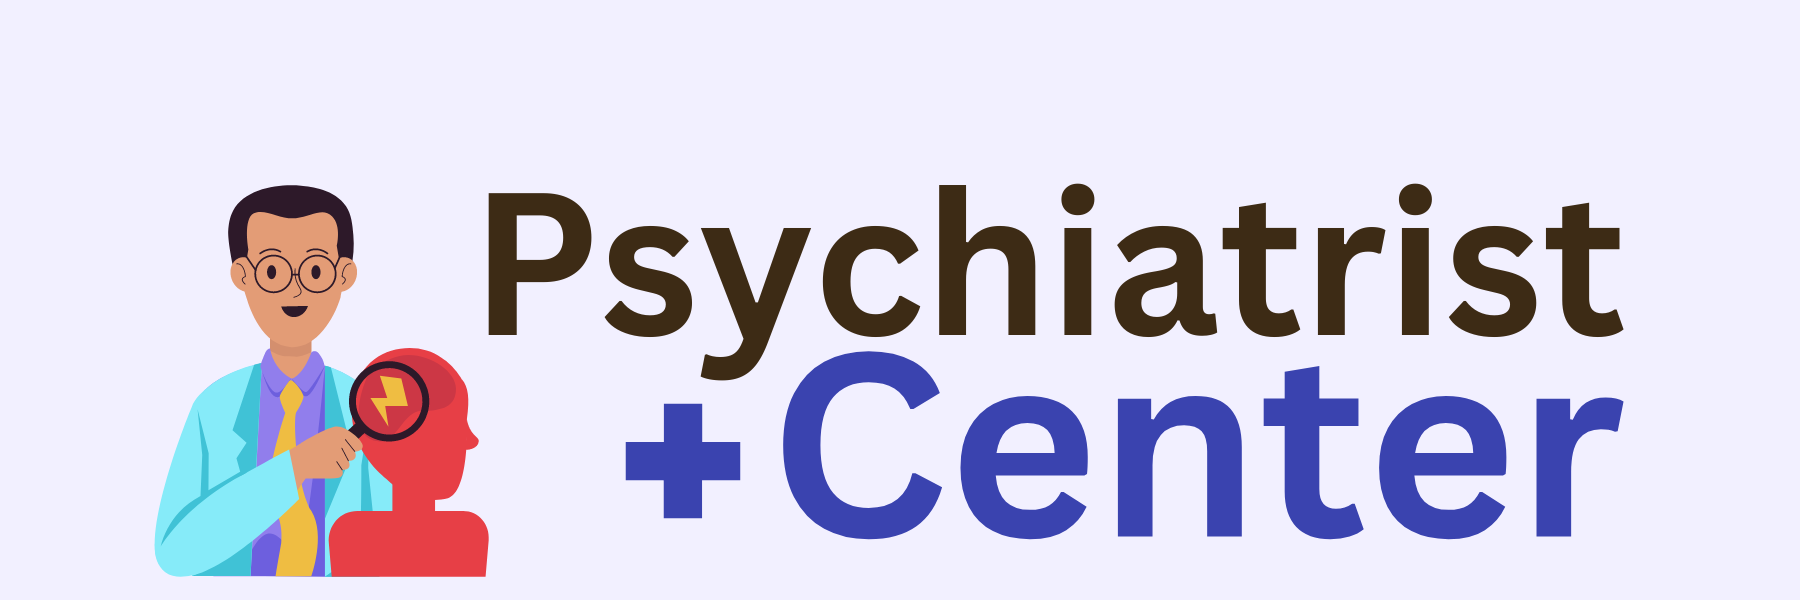 Psychiatrist Centre